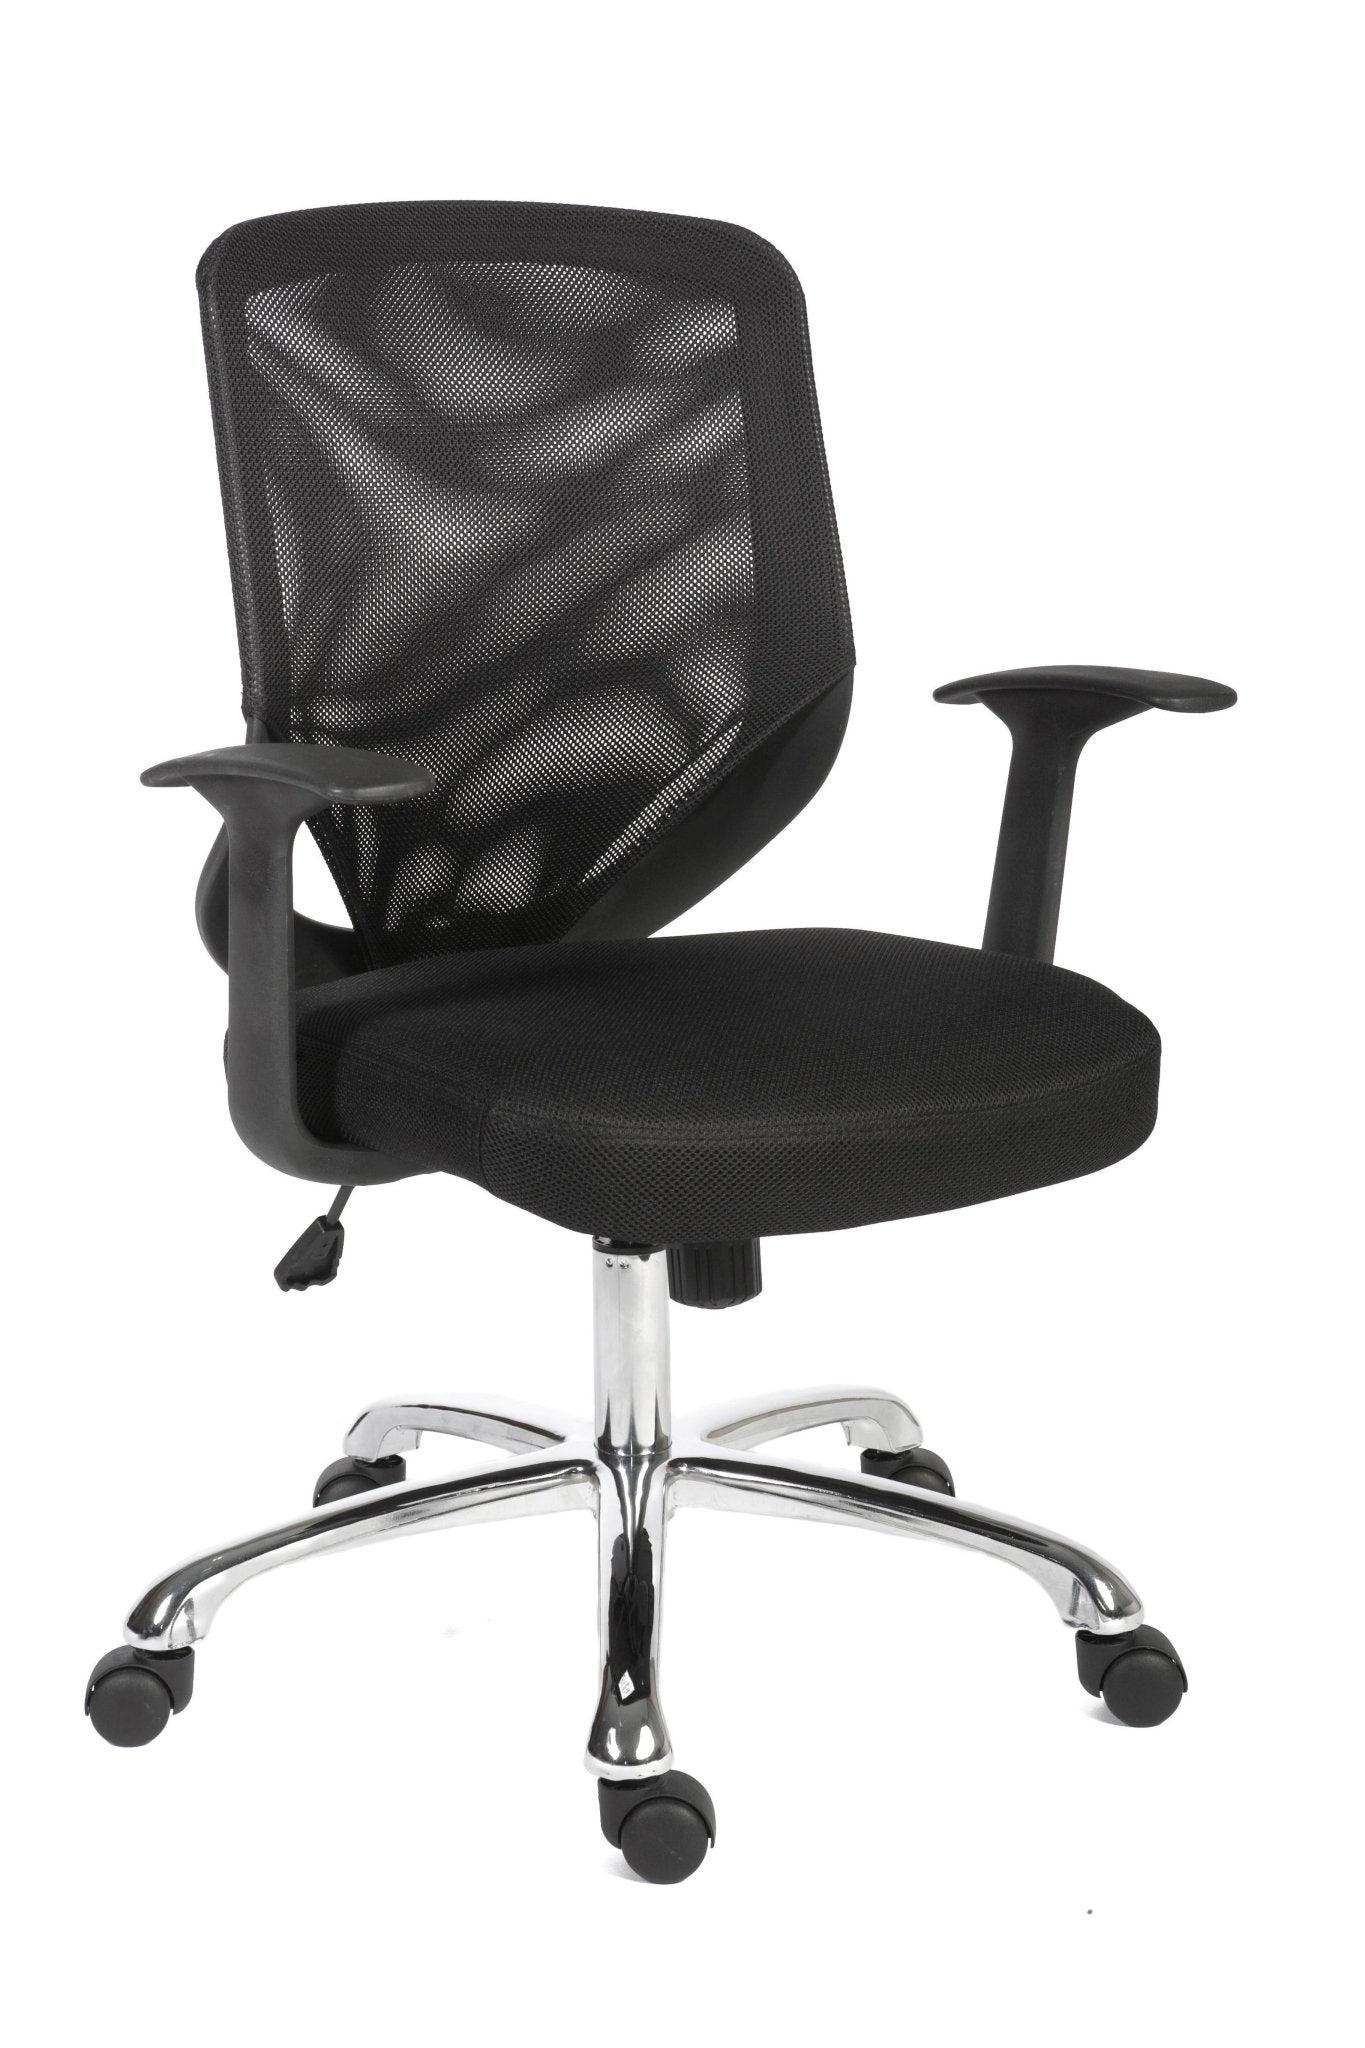 Nova mesh office chair - crimblefest furniture - image 1